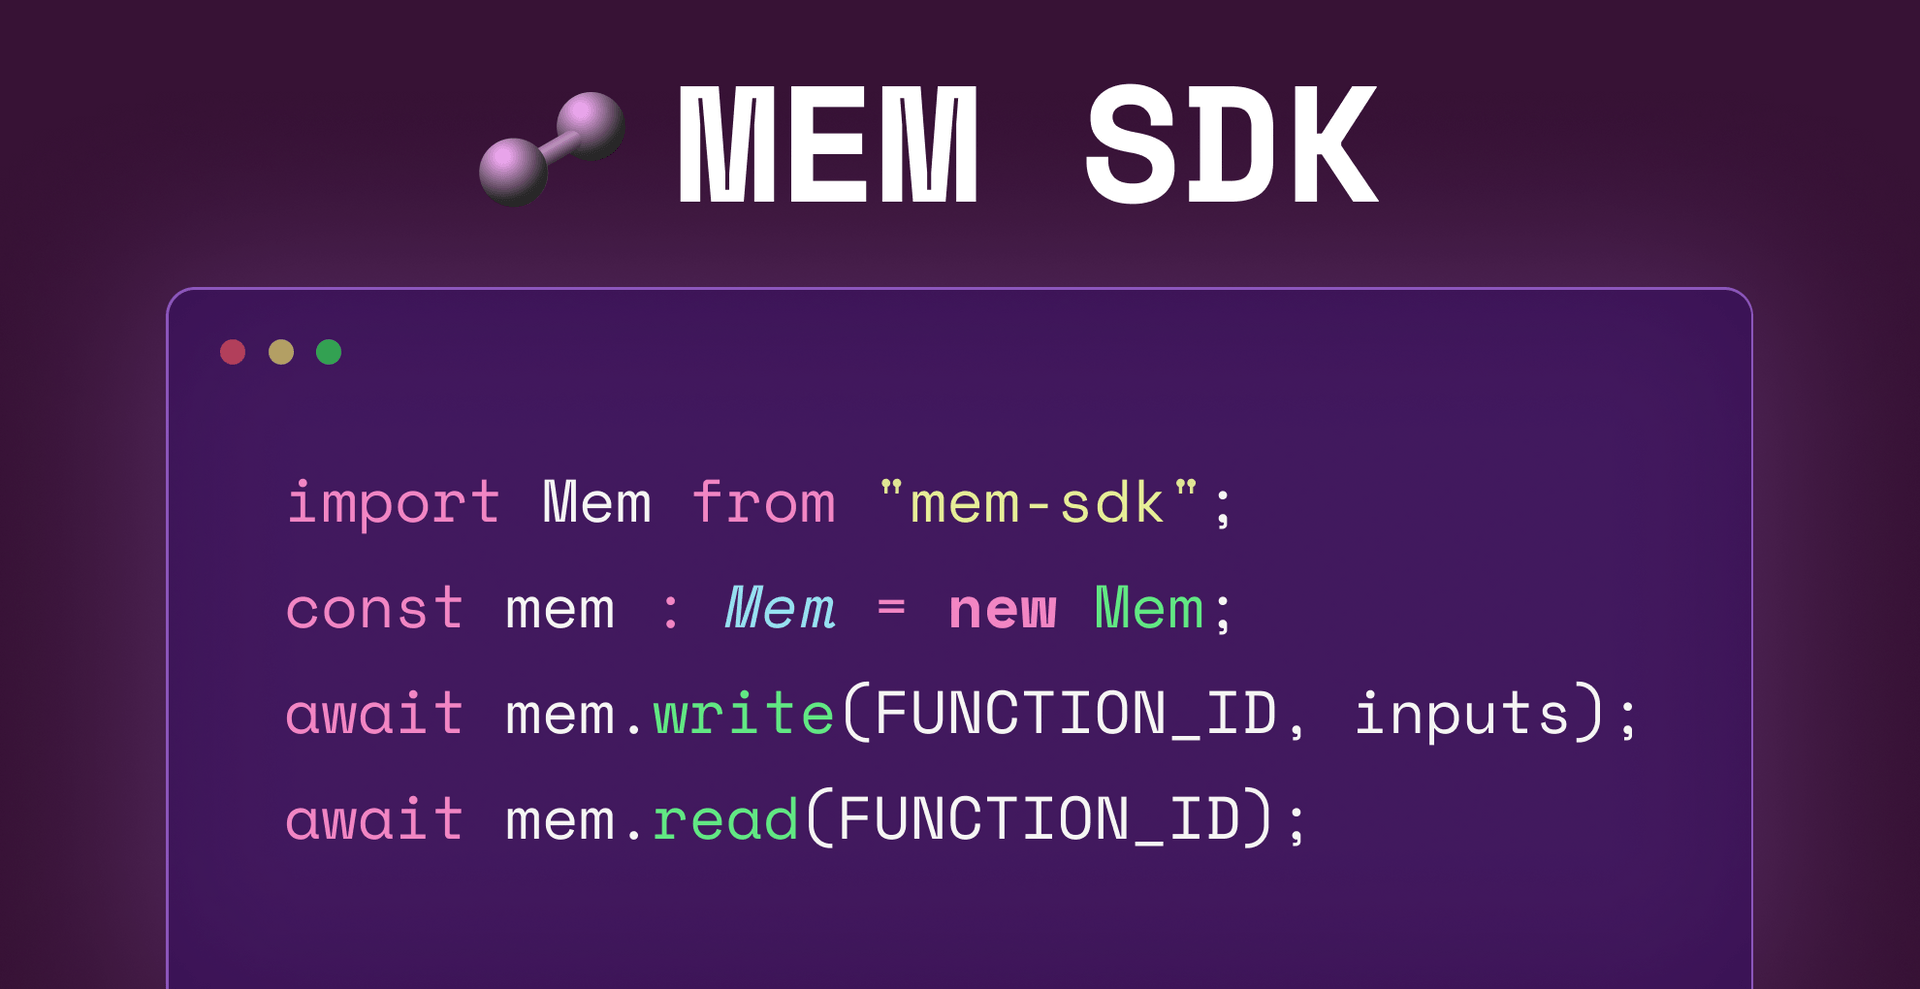 The MEM SDK is now live